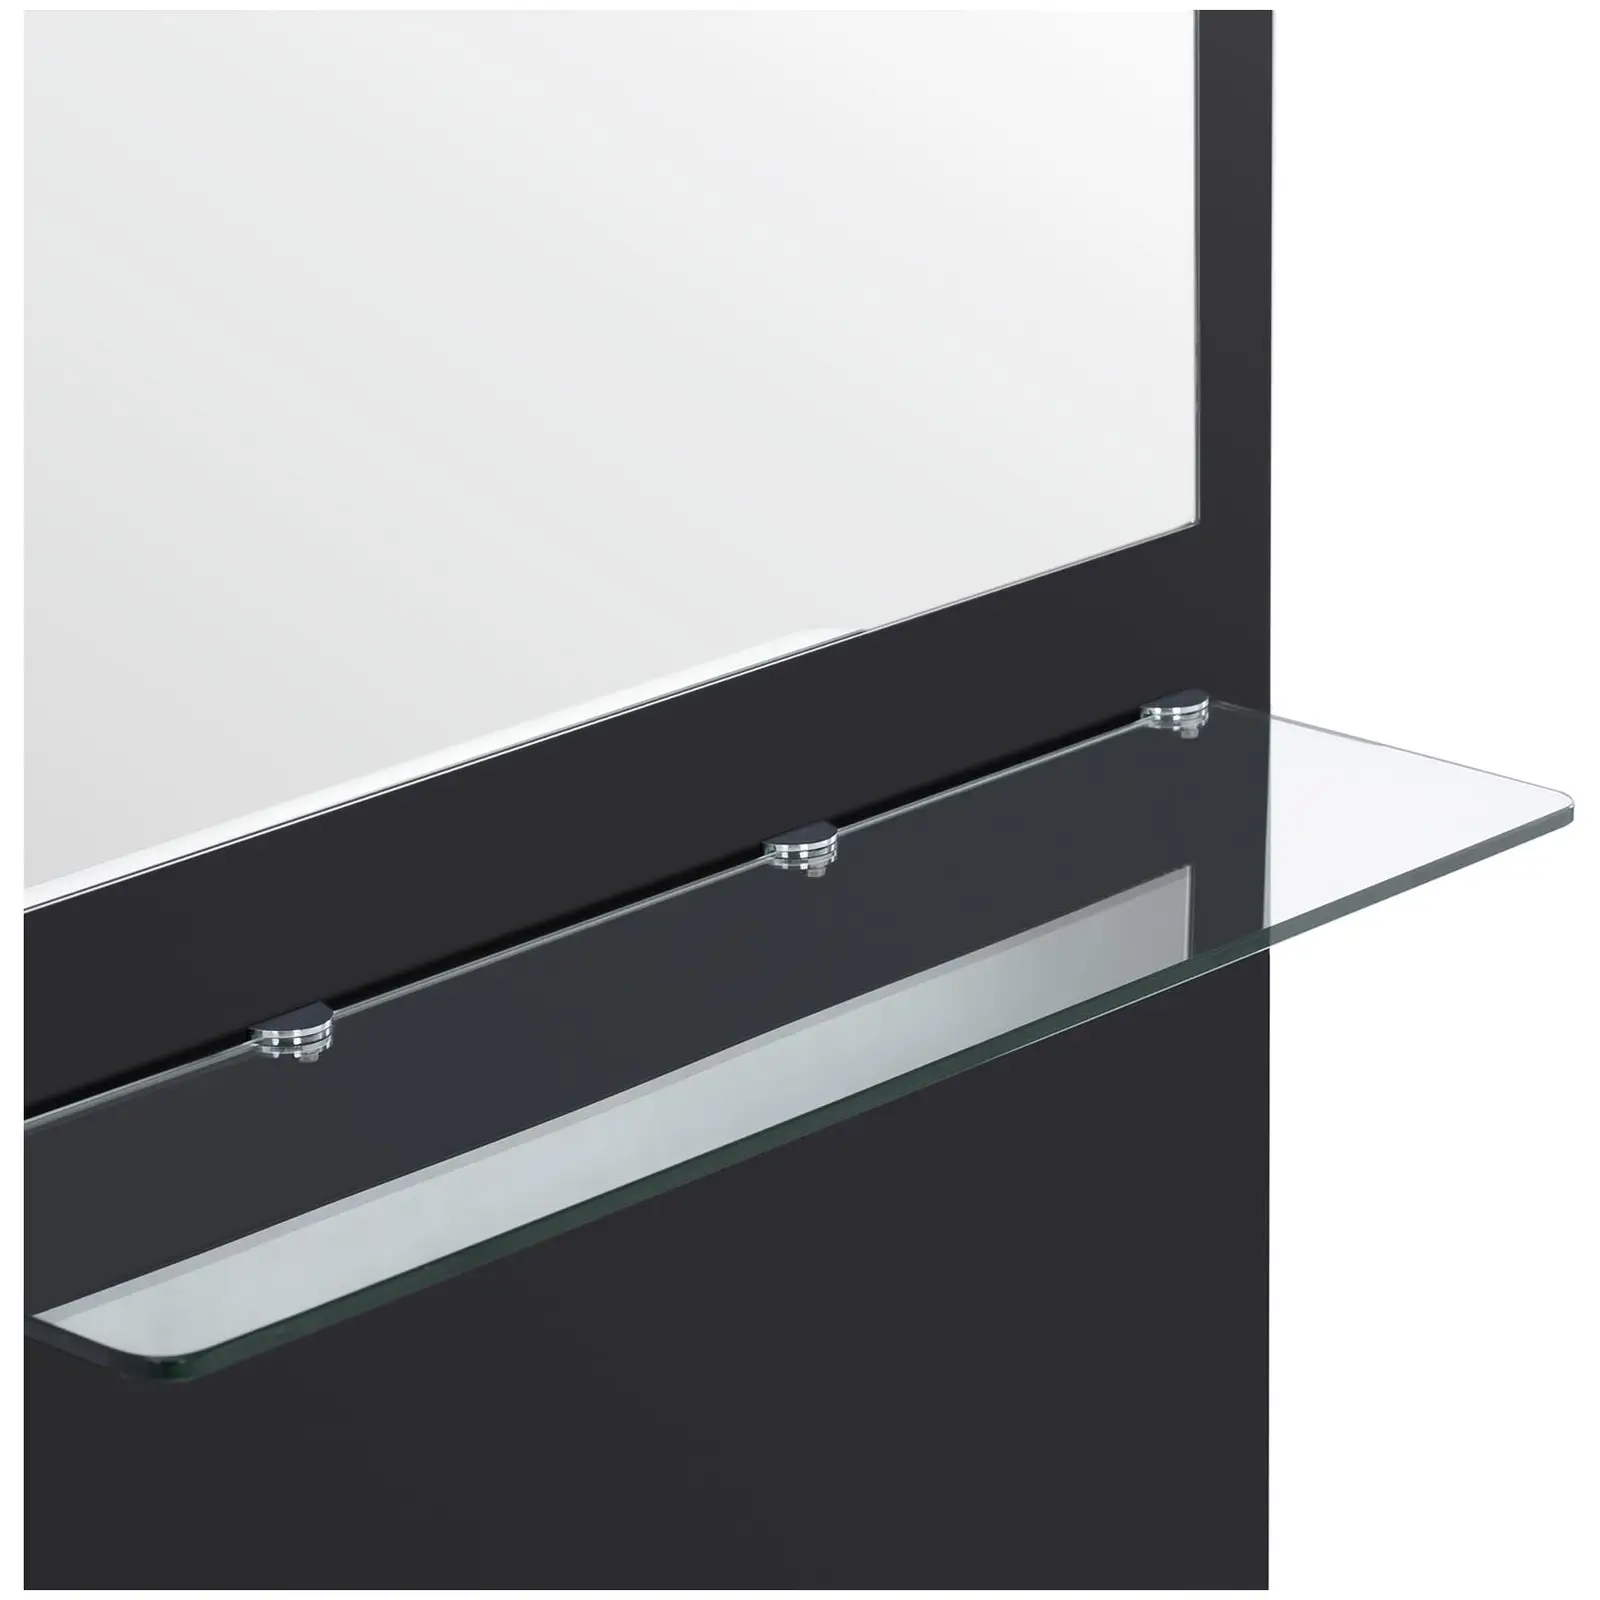 Frisørspeil - Veggmontert - Glasshylle - 5 kg - 80 x 20 x 180 cm